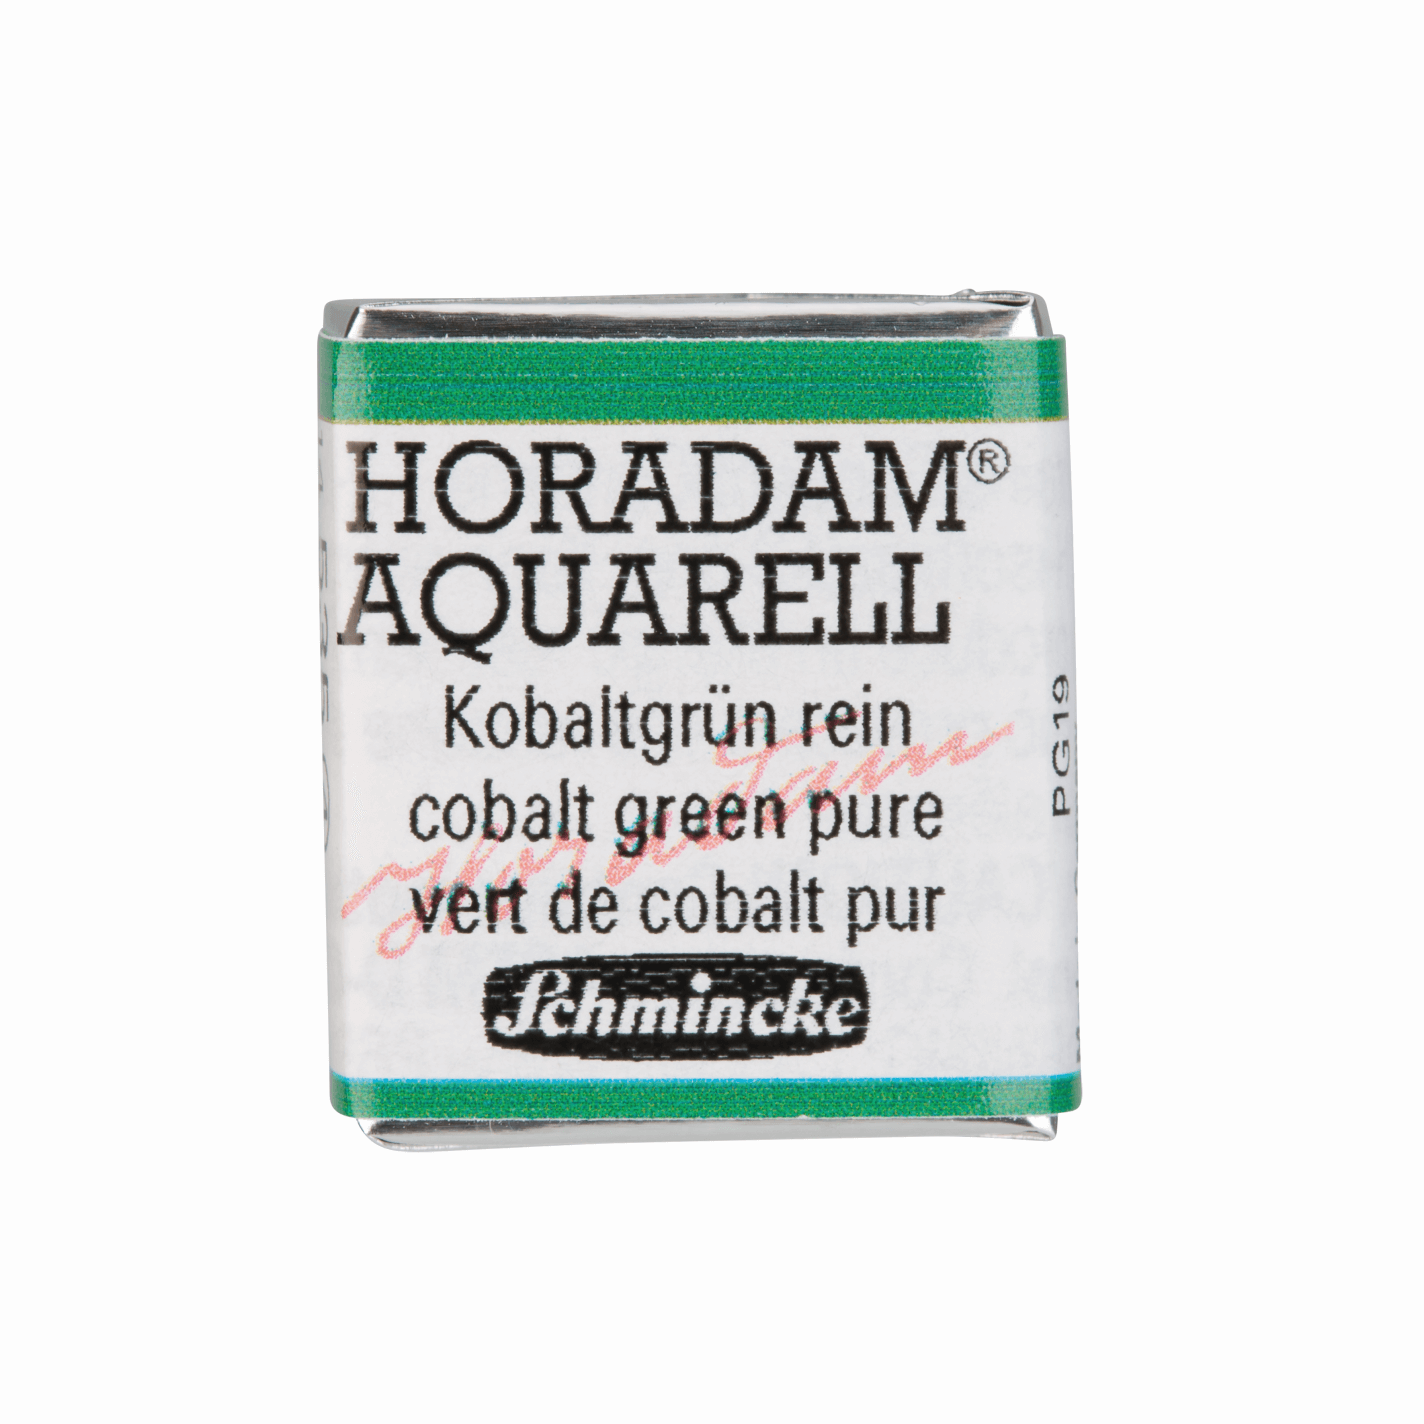 Schmincke Horadam Aquarell pans 1/2 pan Cobalt Green Pure